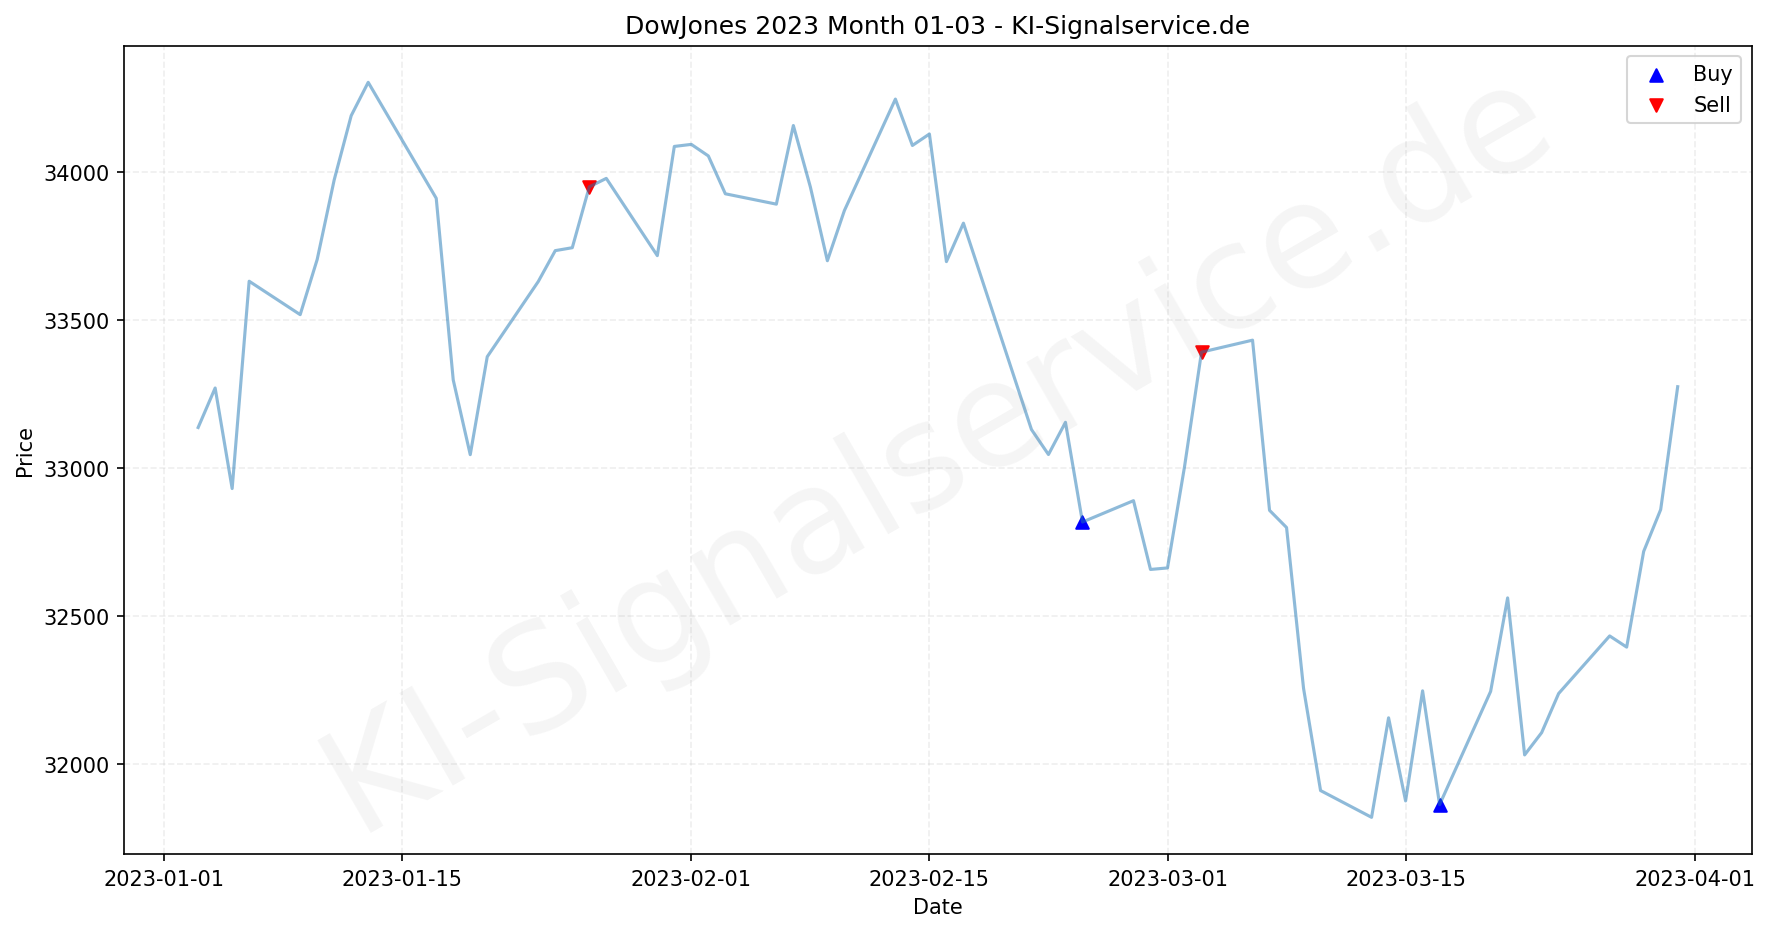 DOWJONES Index Performance Chart - KI Tradingsignale 2023